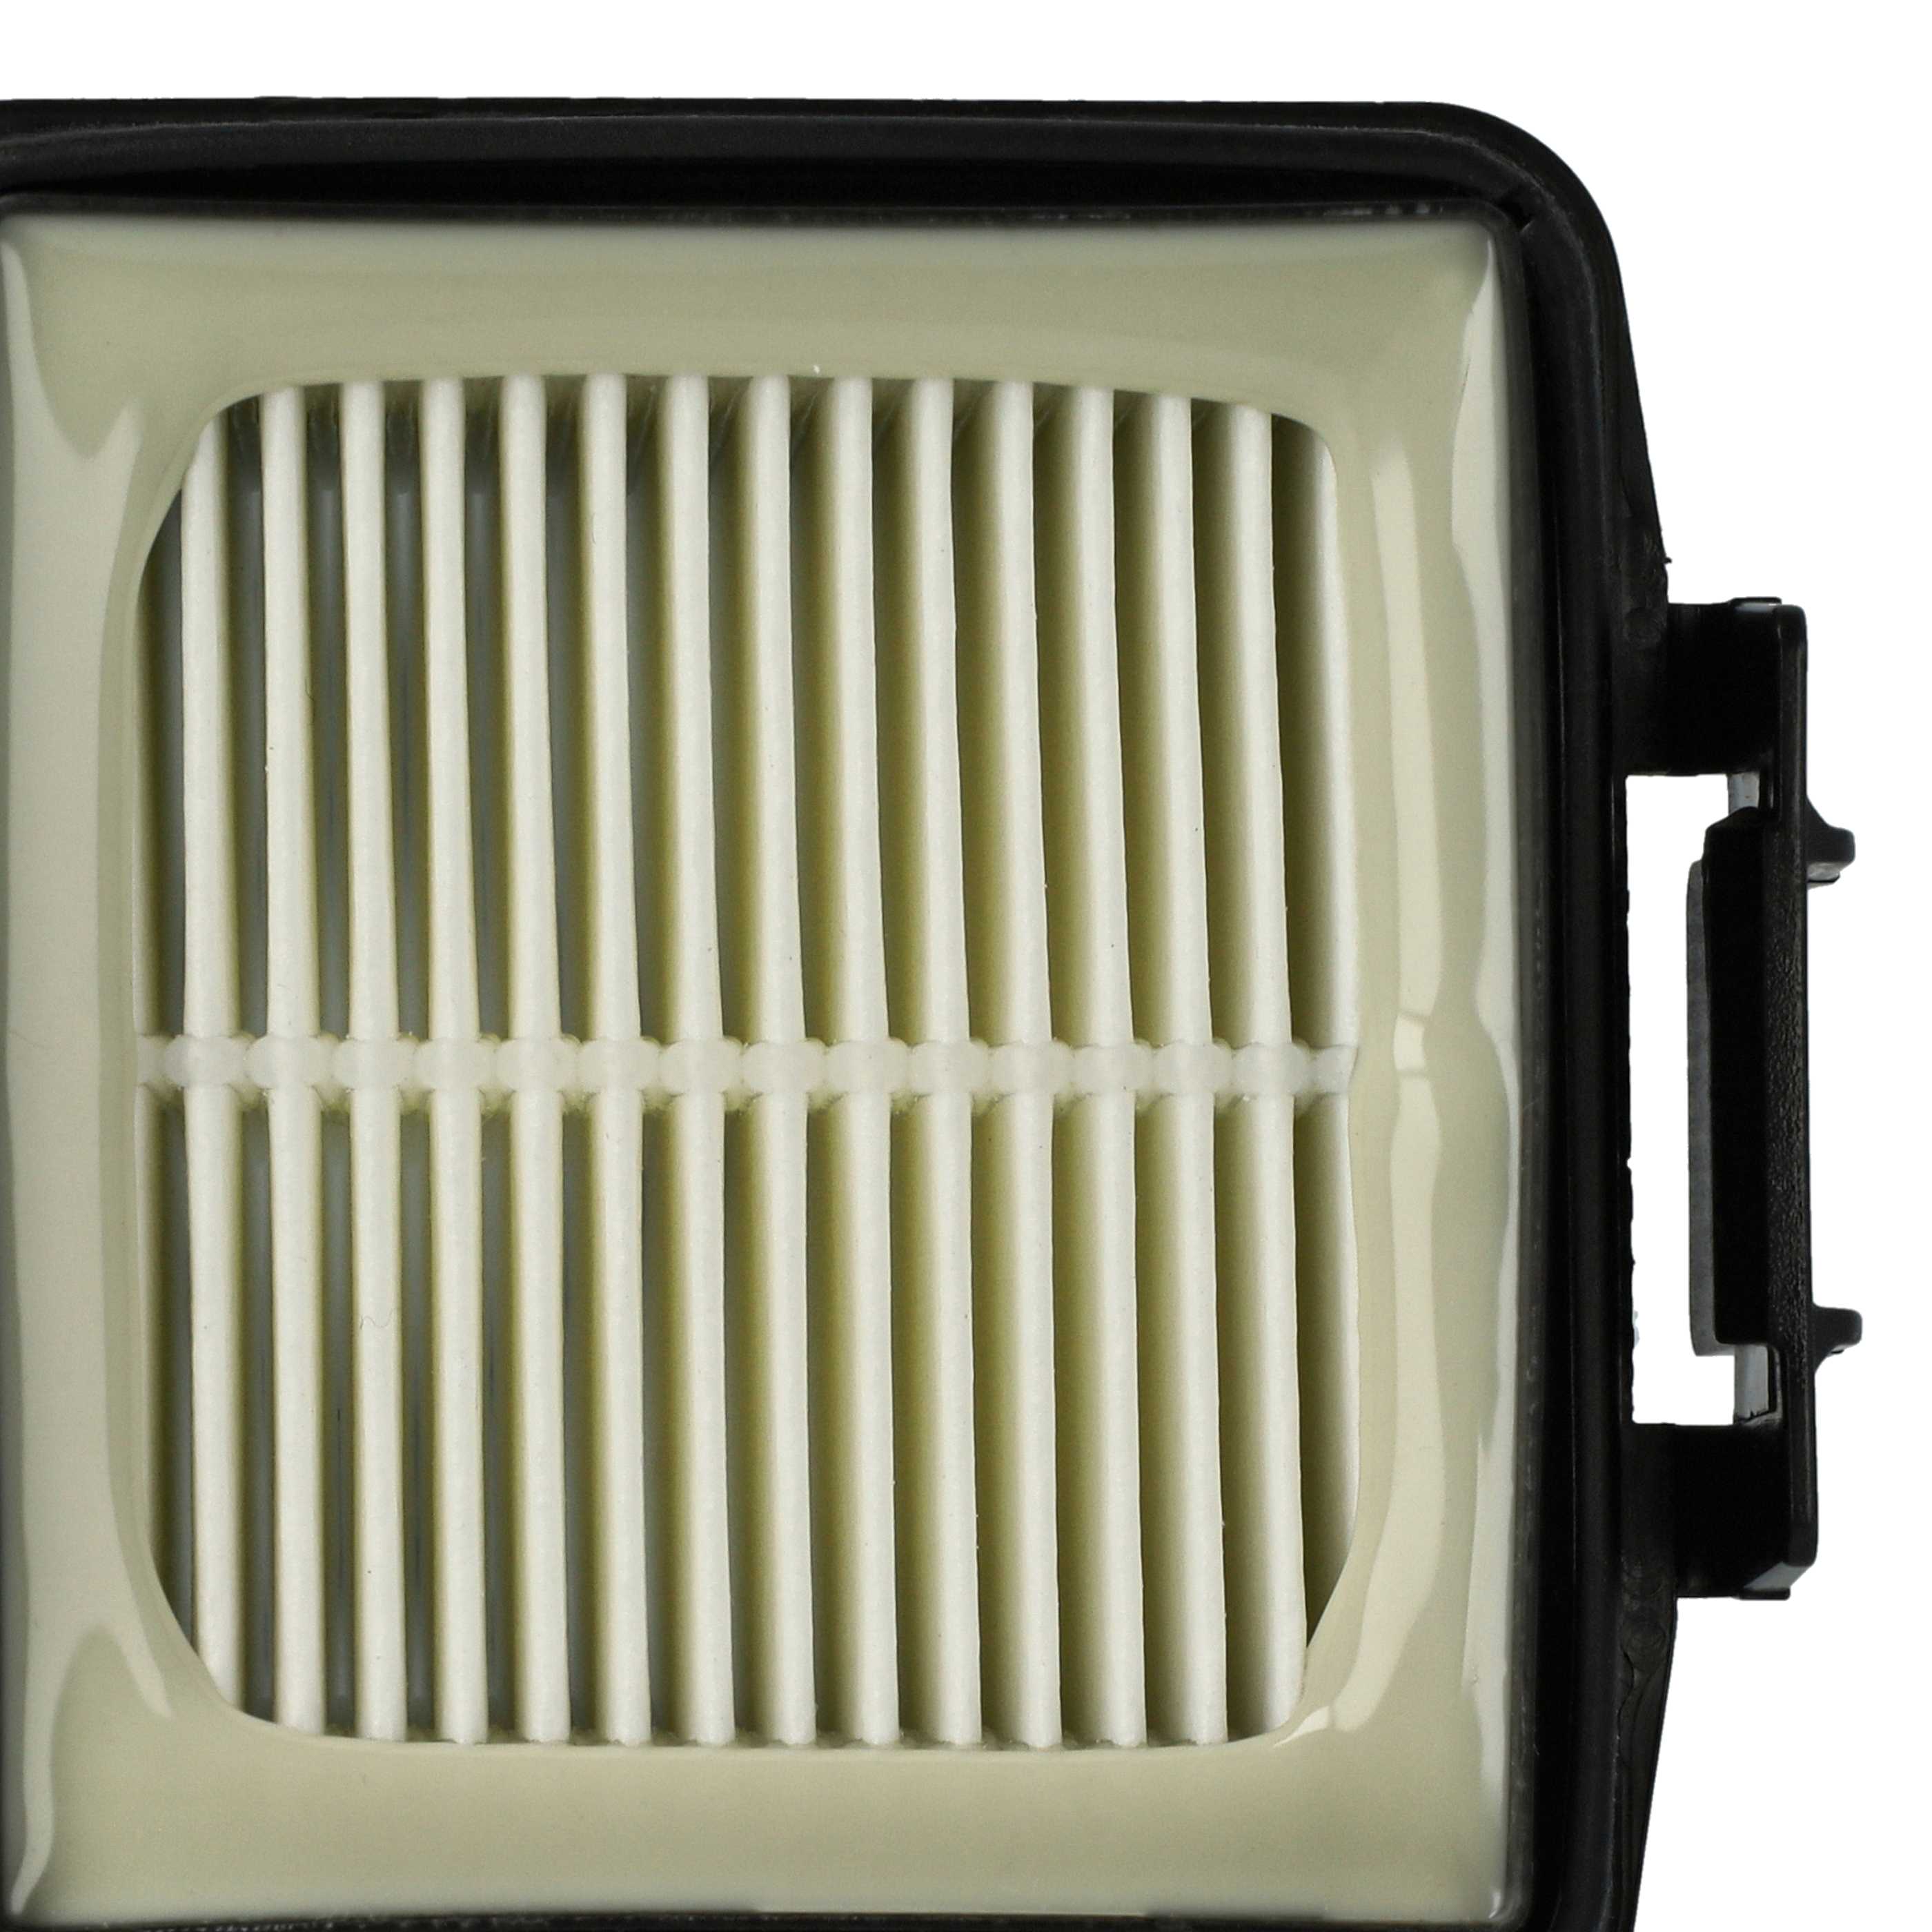 2x Filtro reemplaza Kärcher 2.863-240.0 para aspiradora - filtro Hepa negro / blanco